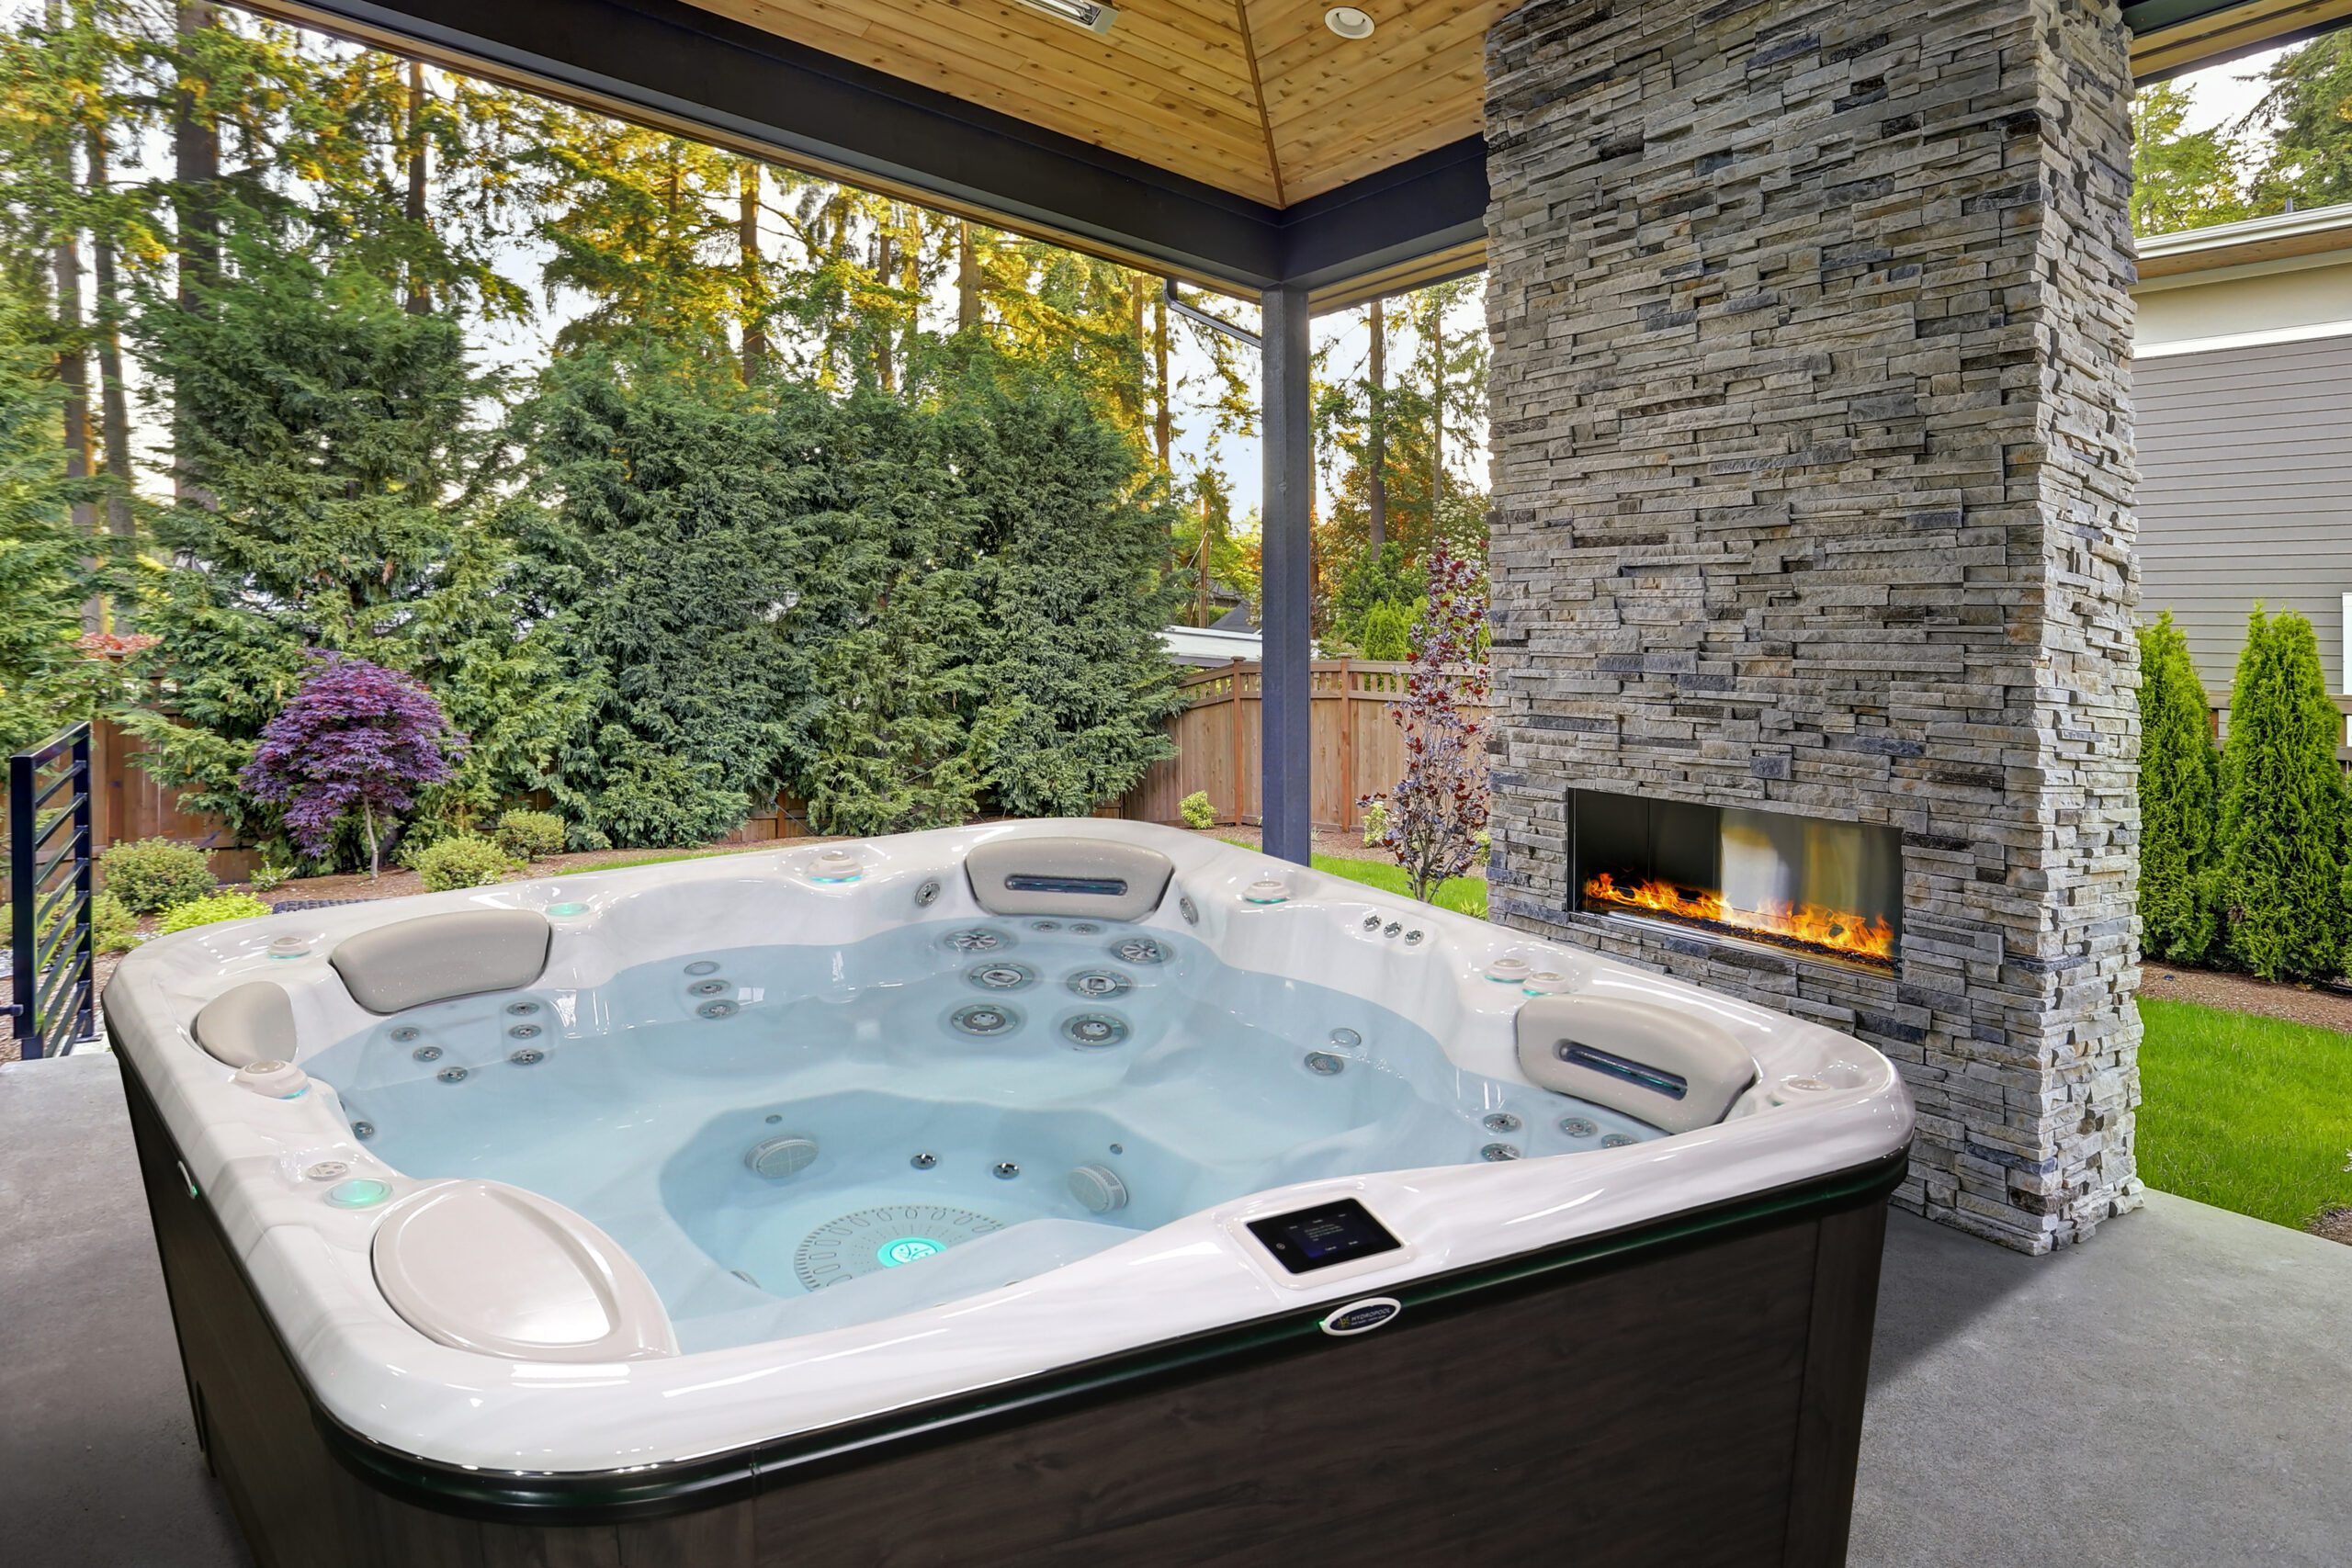 New modern home with hot tub and backyard patio - Lunar Lagoons Ohio